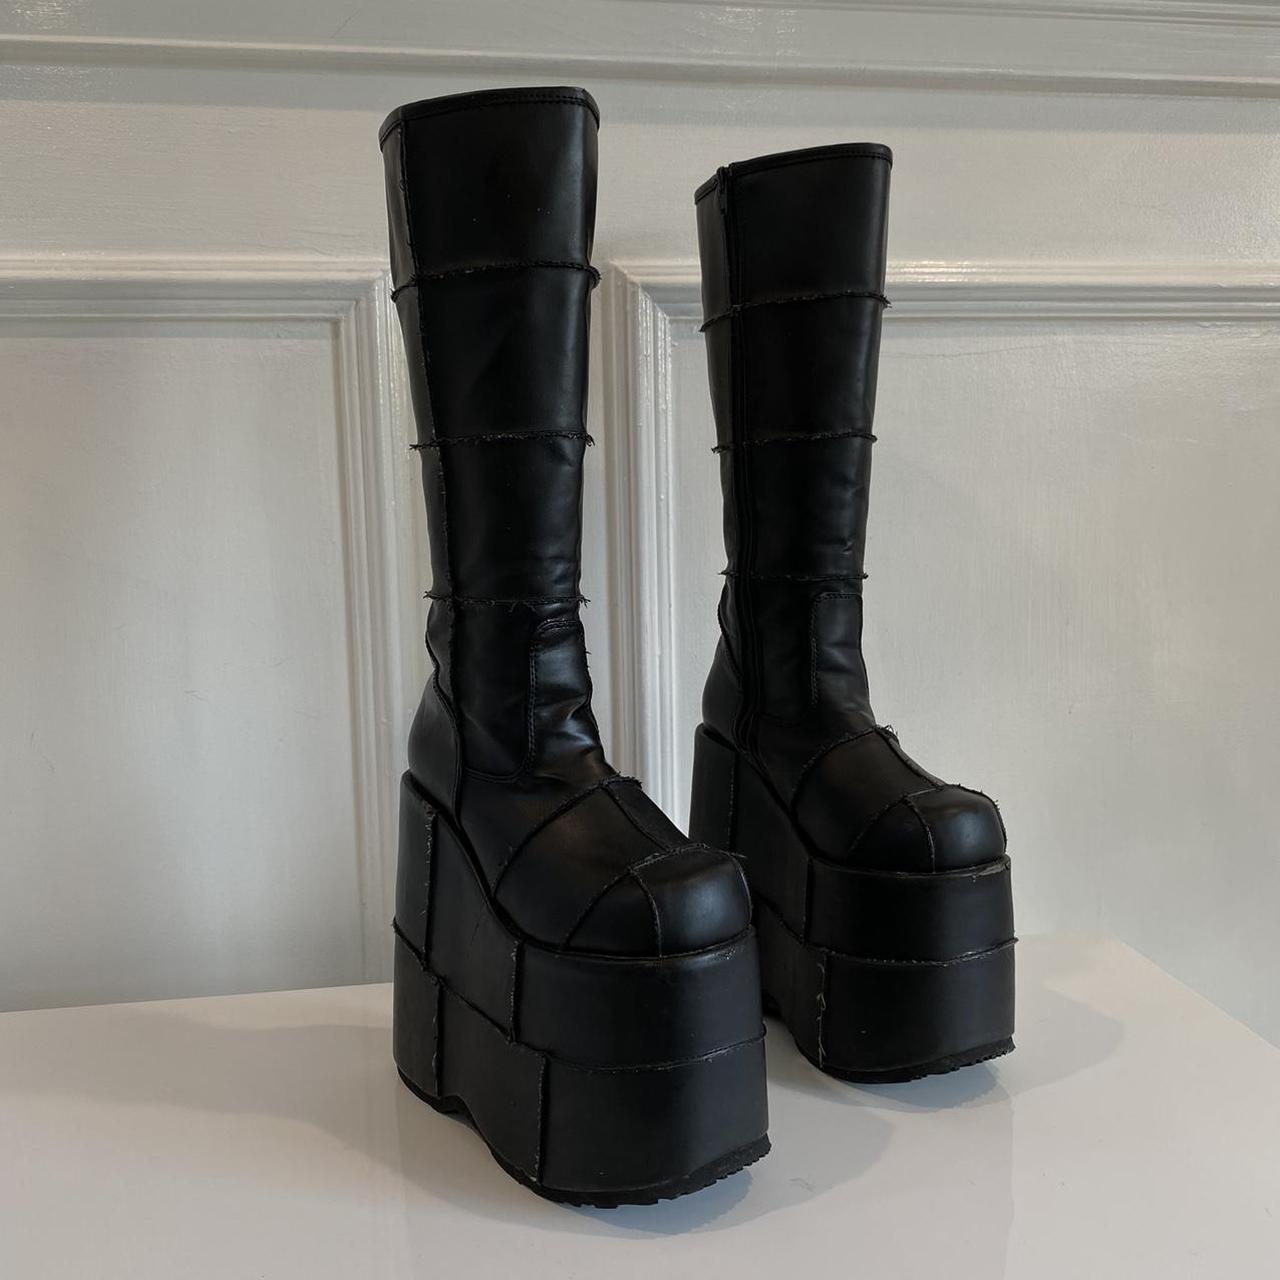 Product Image 2 - Black Demonia platform boots 

Size